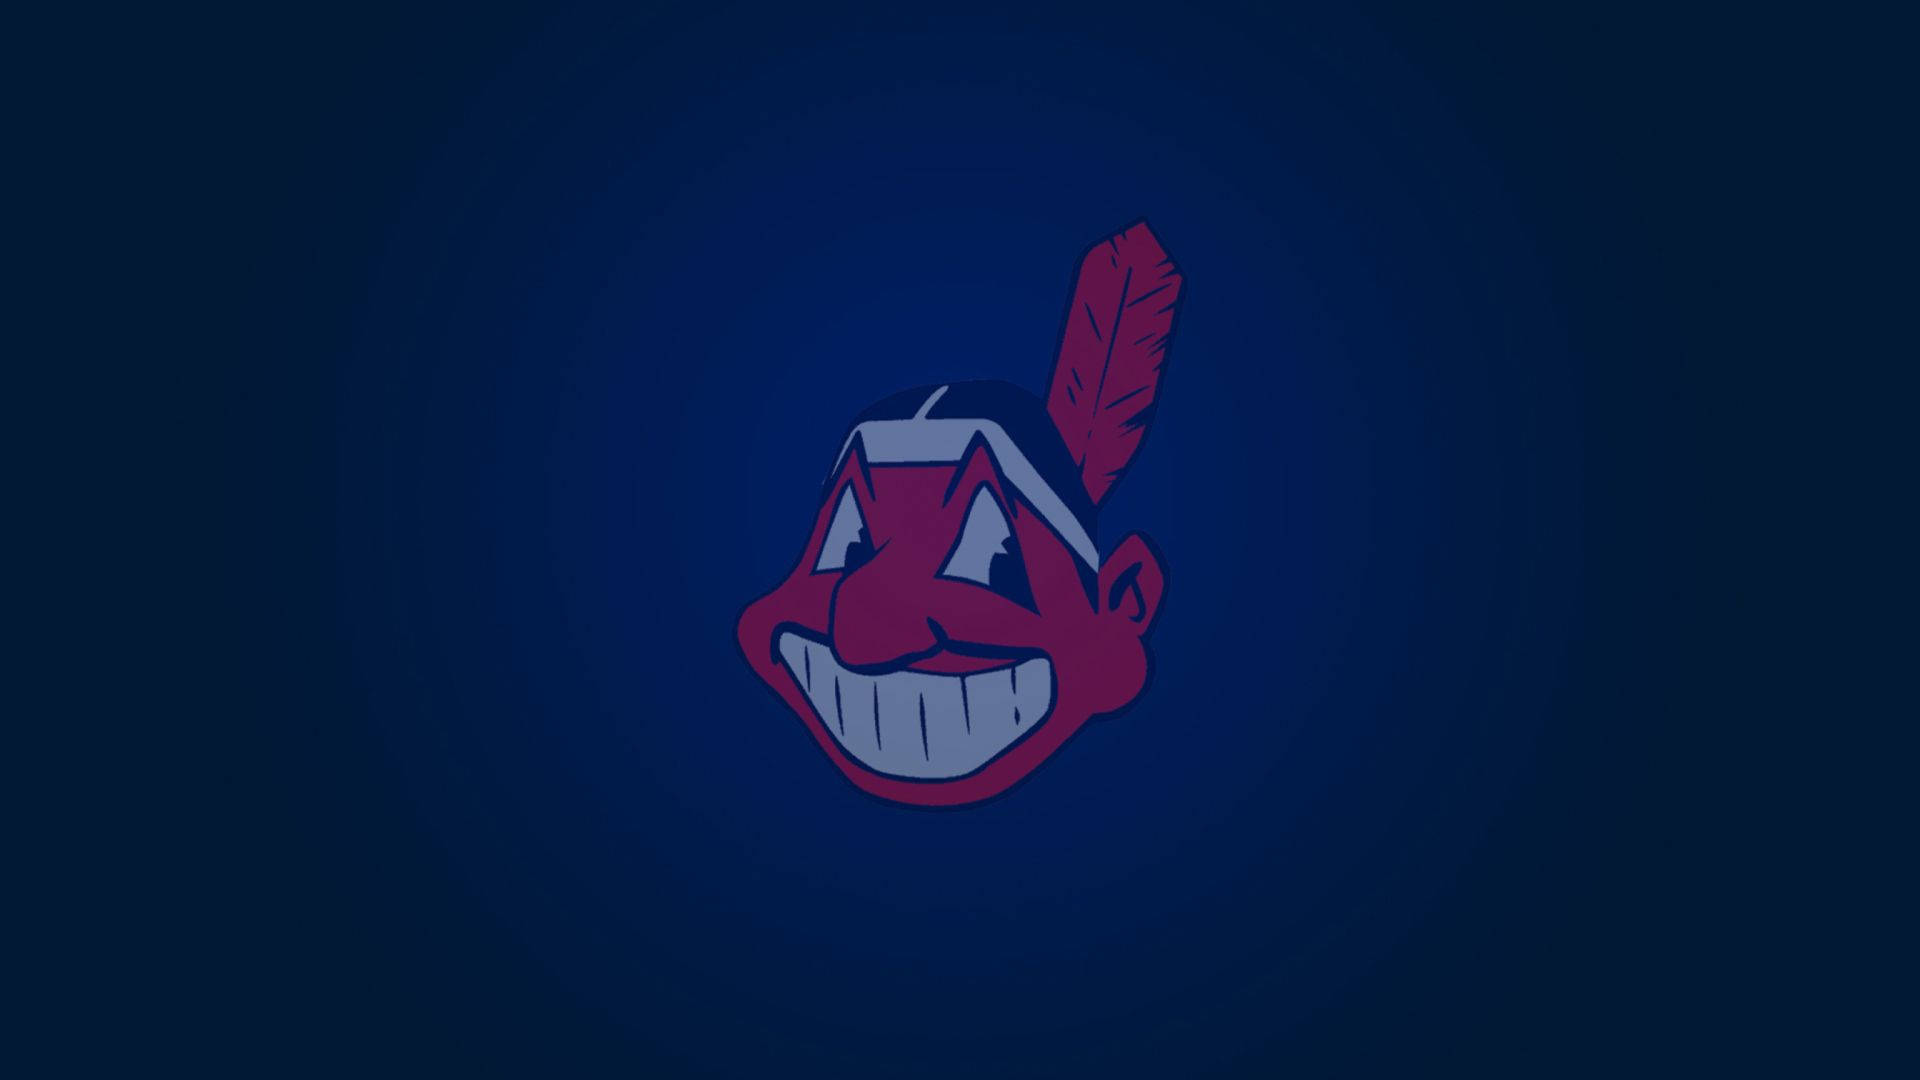 100+] Cleveland Indians Background s